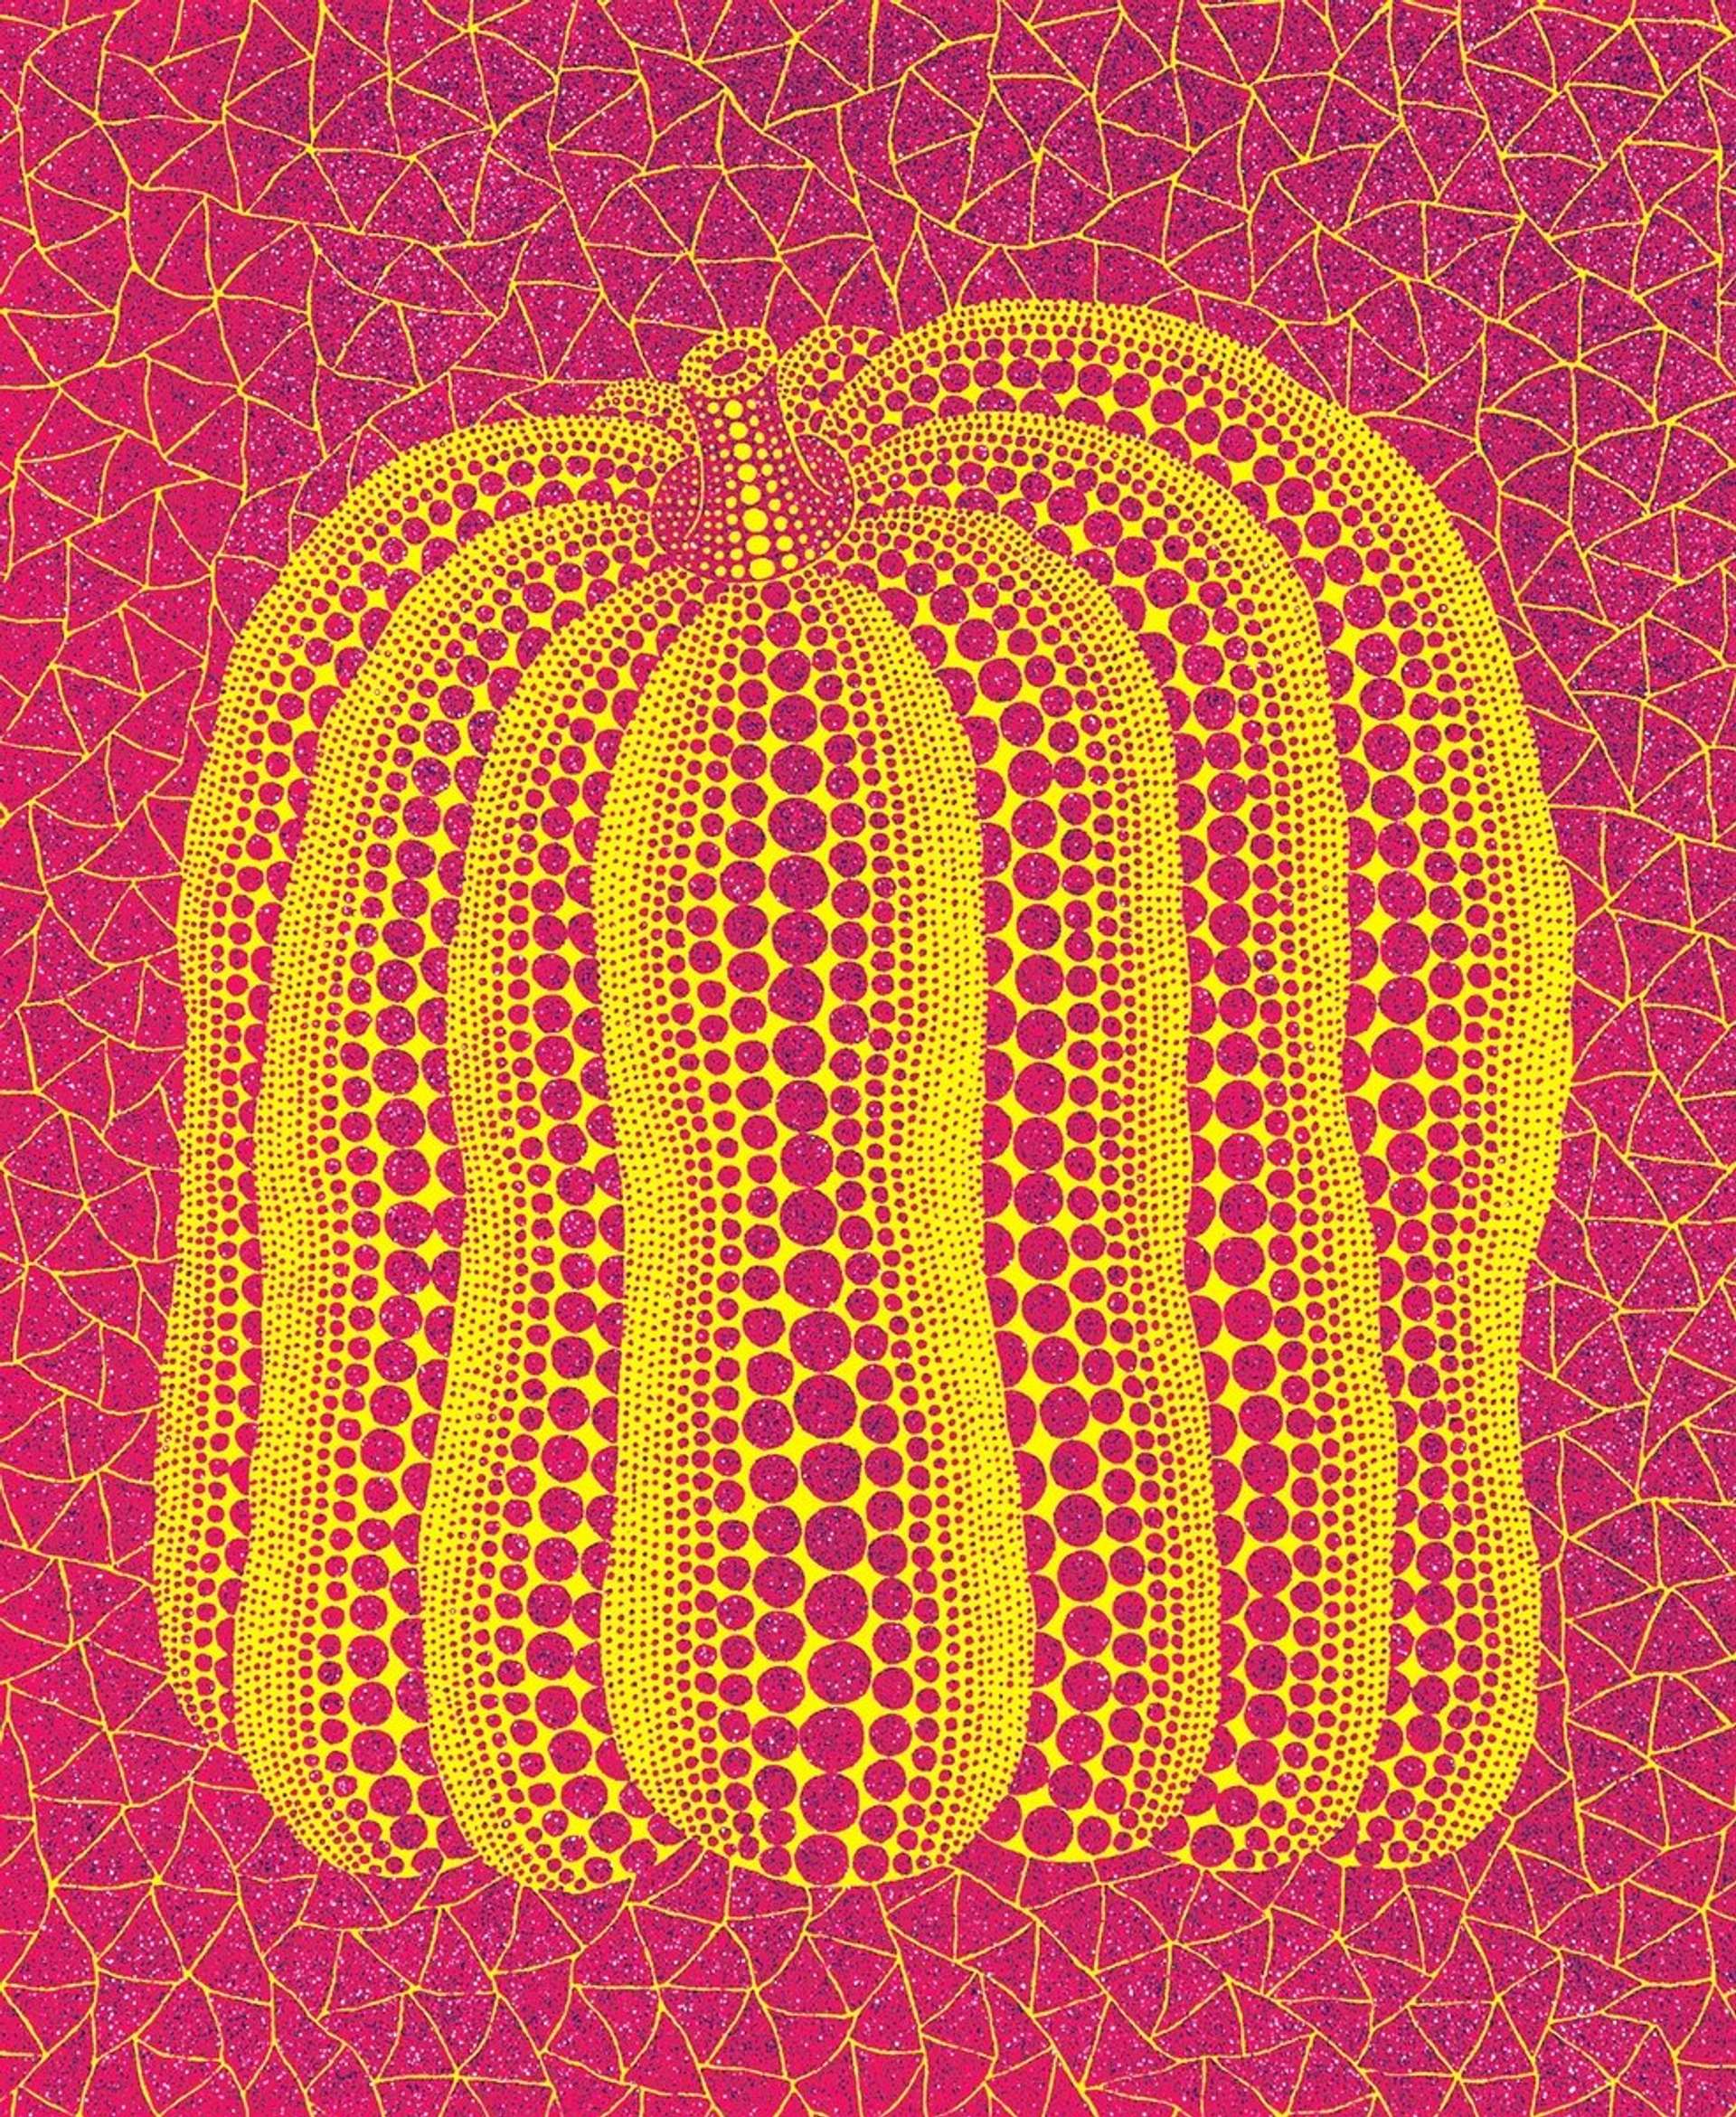 Yayoi Kusama's Pumpkin (RT) , Kusama 316. A screenprint of a pumpkin created out of a pattern of yellow and pink polka dots against a geometric patterned background